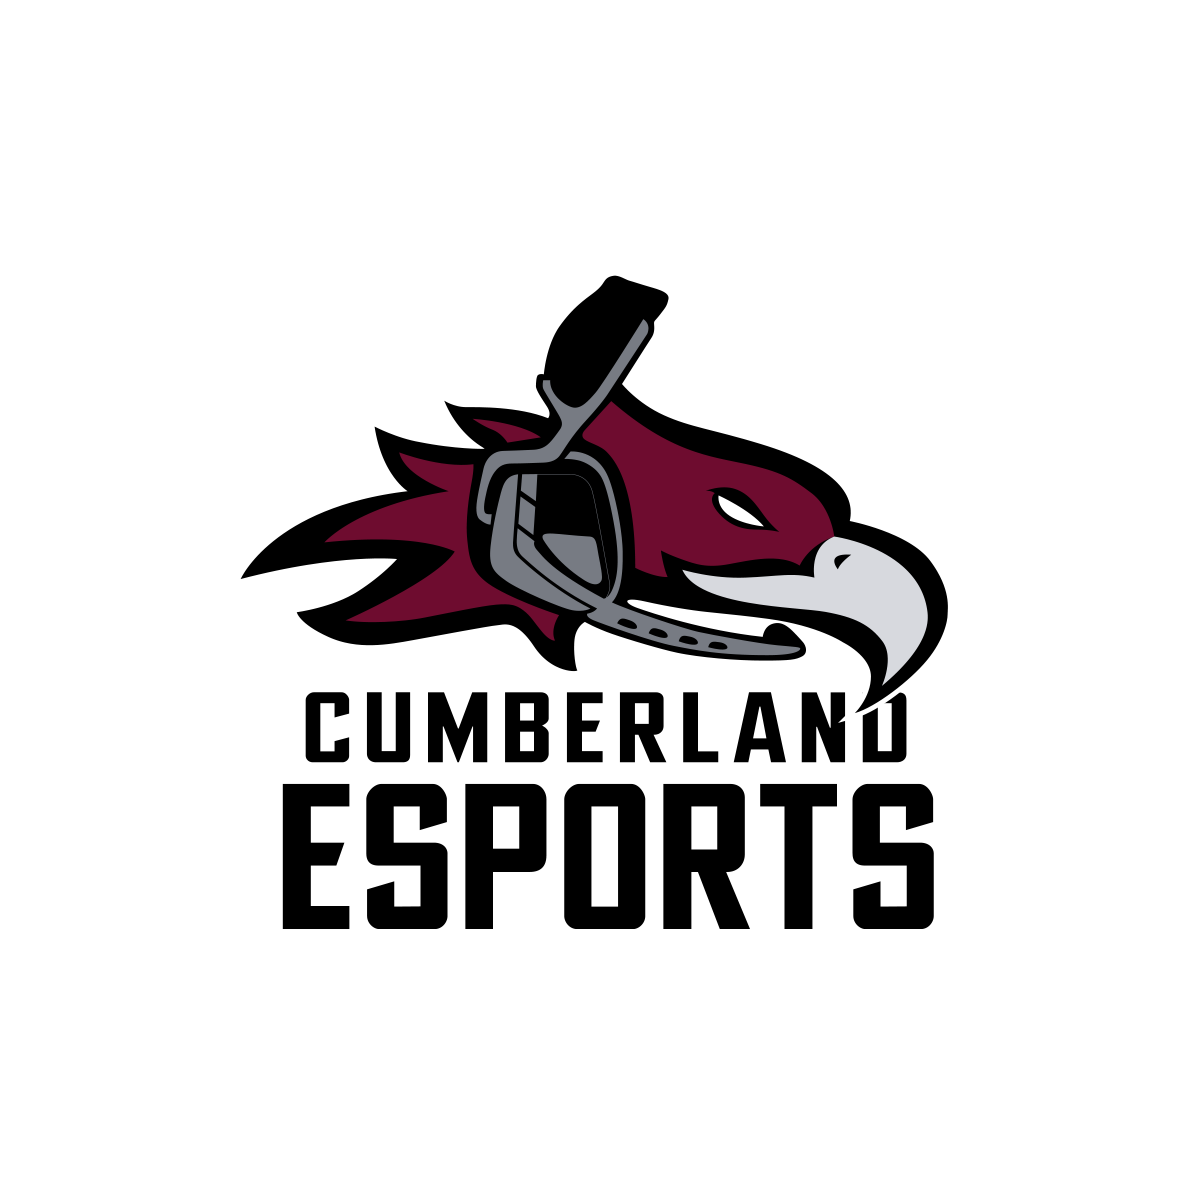 Cumberland University Esports Emerge Apparel